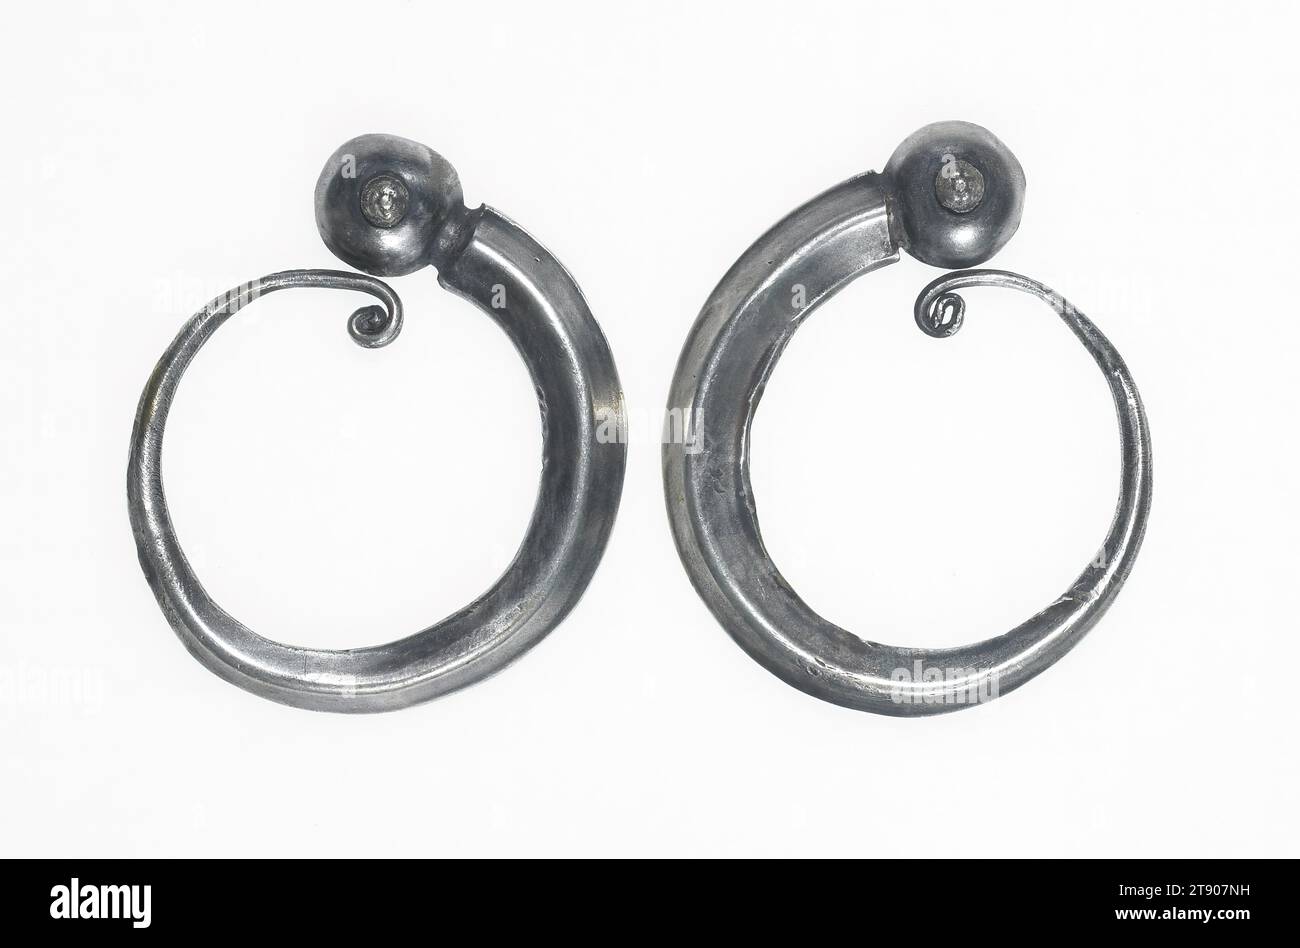 Pair of Earrings, 2 1/4 x 2 3/8 x 3/8 in. (5.72 x 6.03 x 0.95 cm) (a)2 1/4 x 2 3/8 x 3/8 in. (5.72 x 6.03 x 0.95 cm) (b), Silver, China Stock Photo